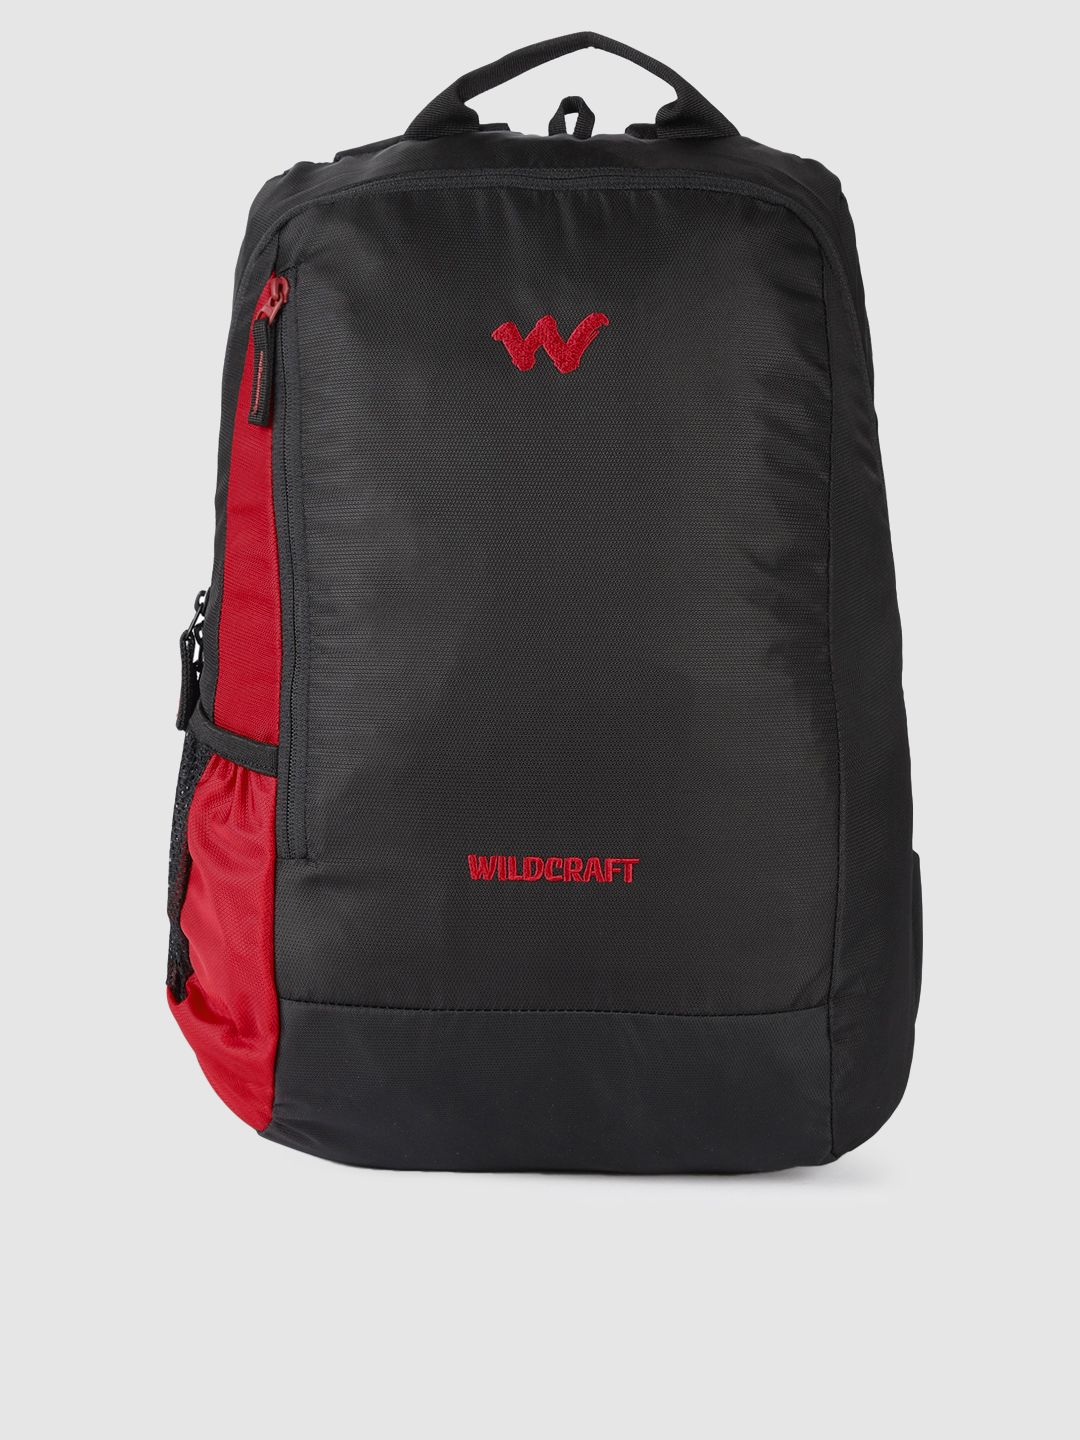 Wildcraft Unisex Black & Red Streak 1.0 Solid Backpack Price in India